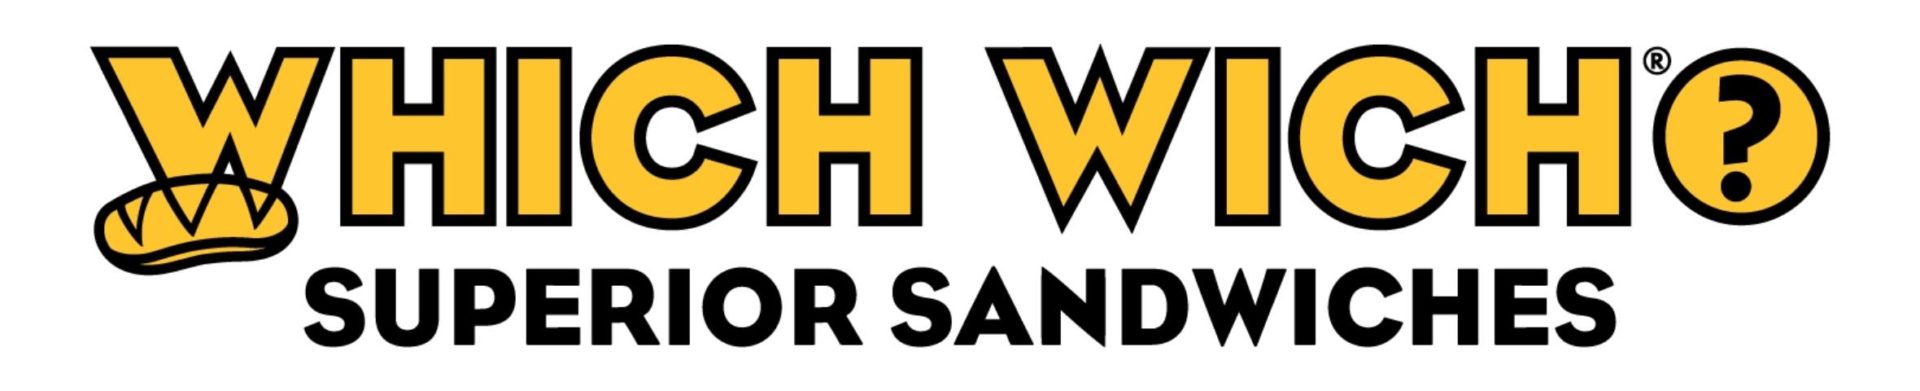 Which Wich sandwich shop logo